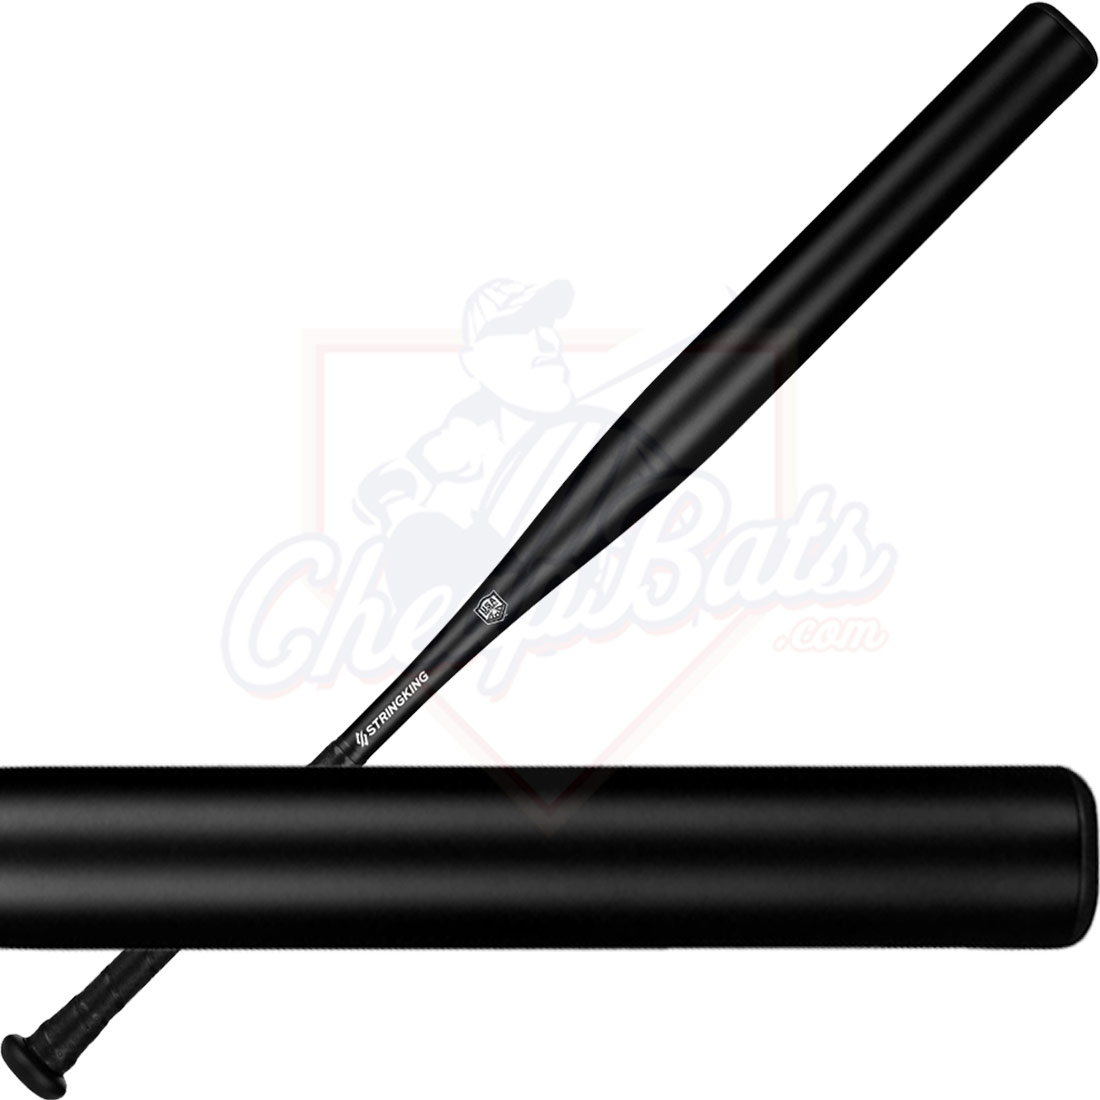 StringKing Metal Pro USA Slowpitch Softball Bat